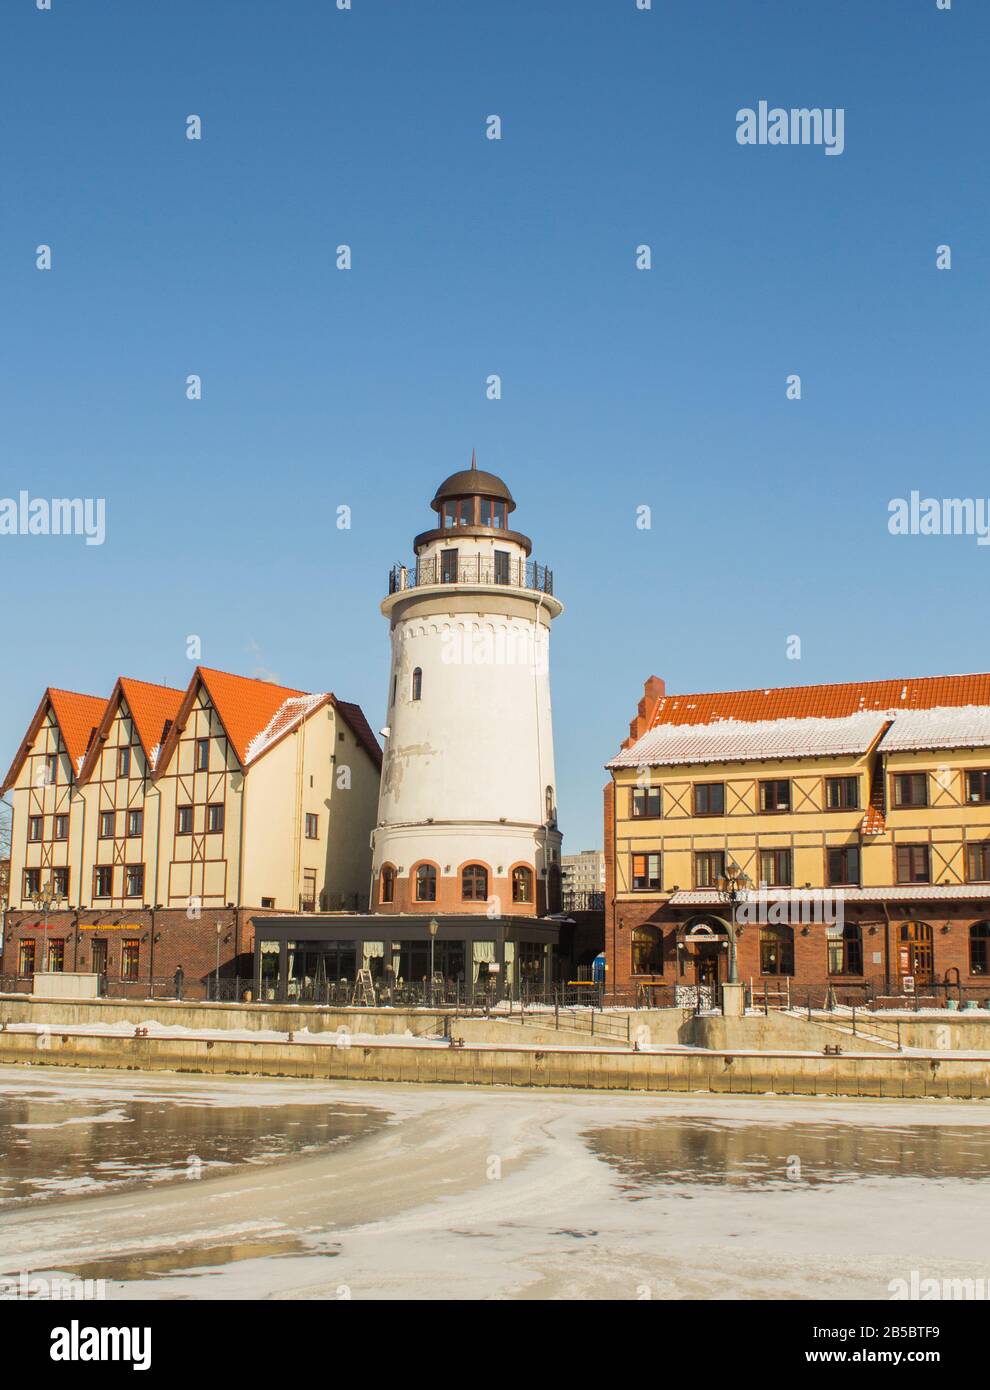 Russia. Kaliningrad. View of Fishing village building Stock Photo